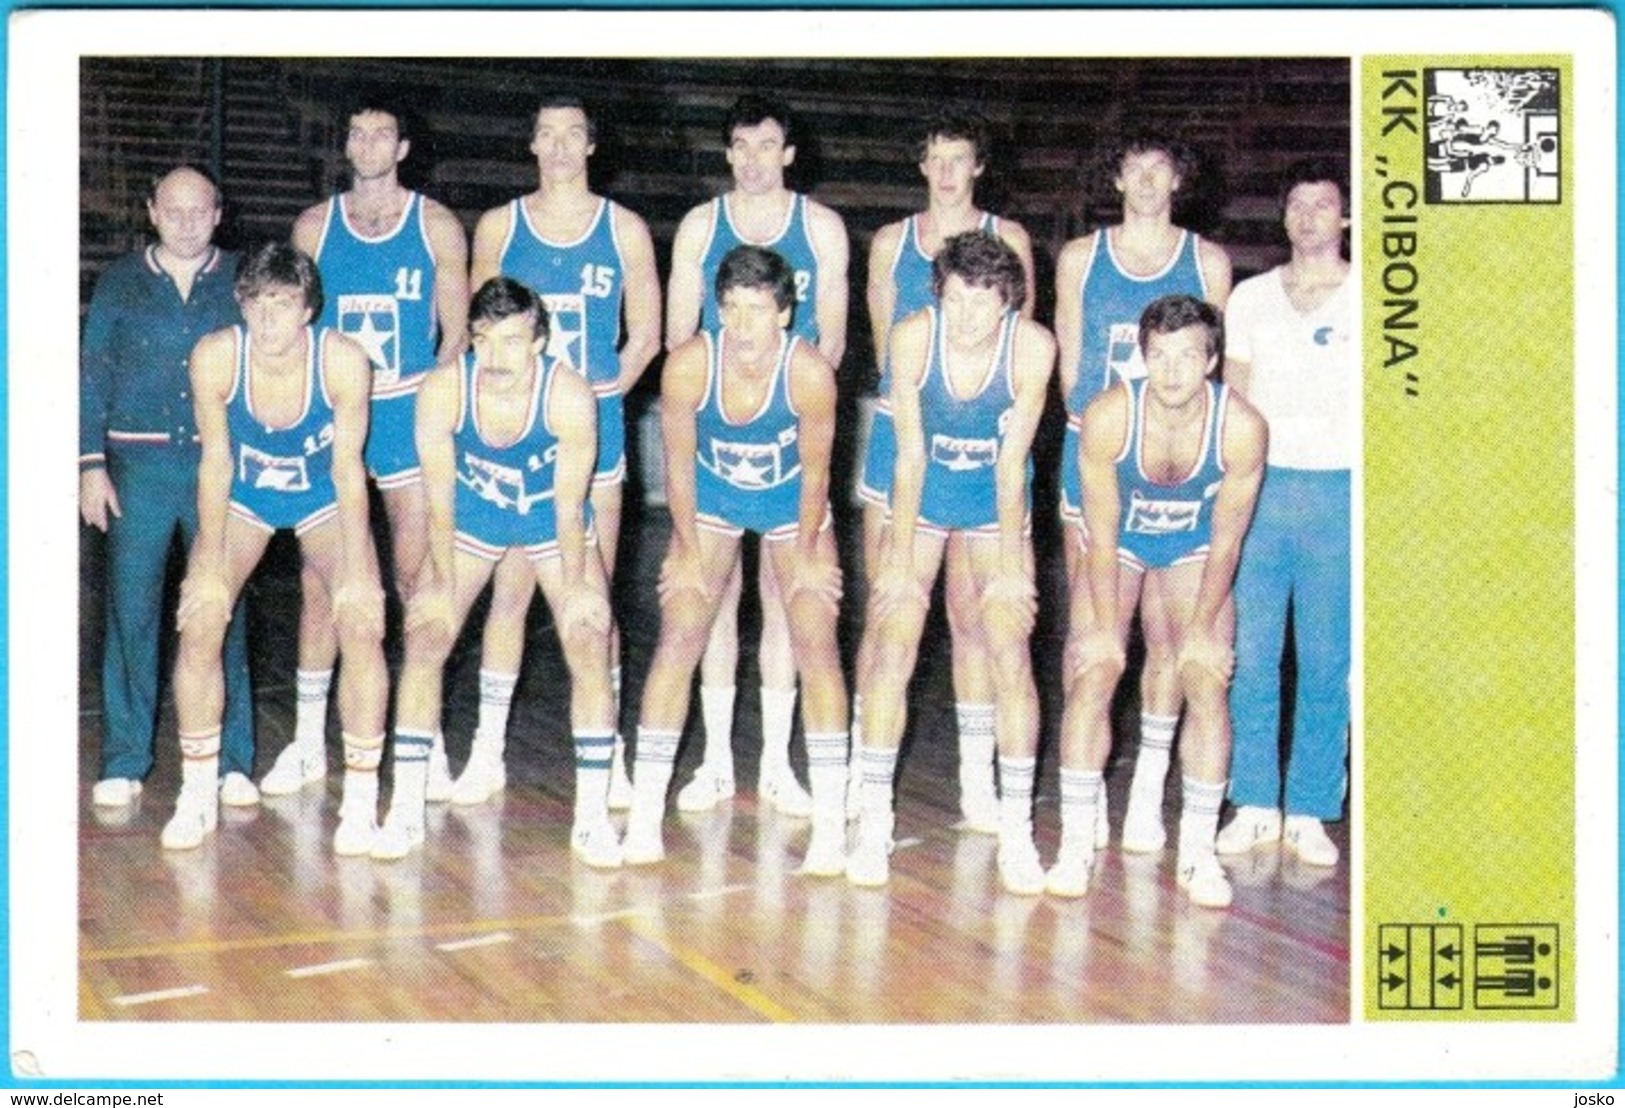 KK CIBONA Zagreb - Kresimir Cosic Mirko Novosel - Yugoslavia Old Card Svijet Sporta Basketball Basket-ball Pallacanestro - Sonstige & Ohne Zuordnung